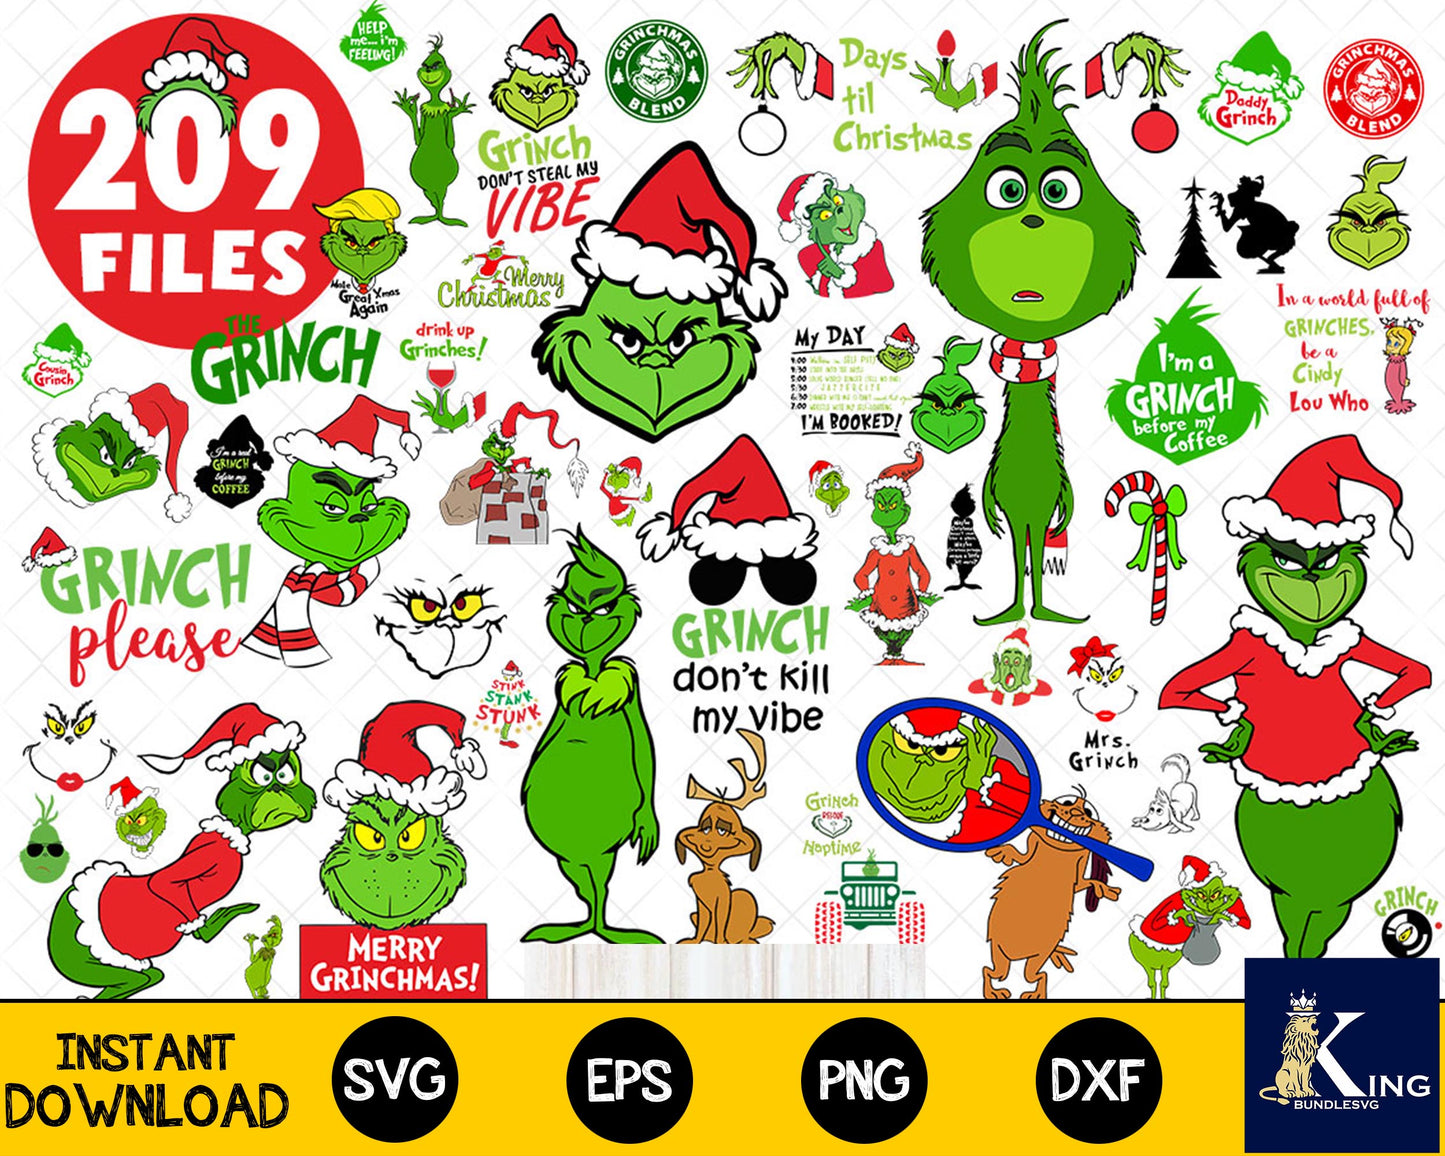 grinch Bundle Christmas svg, 209 file Grinch svg eps png, for Cricut ...